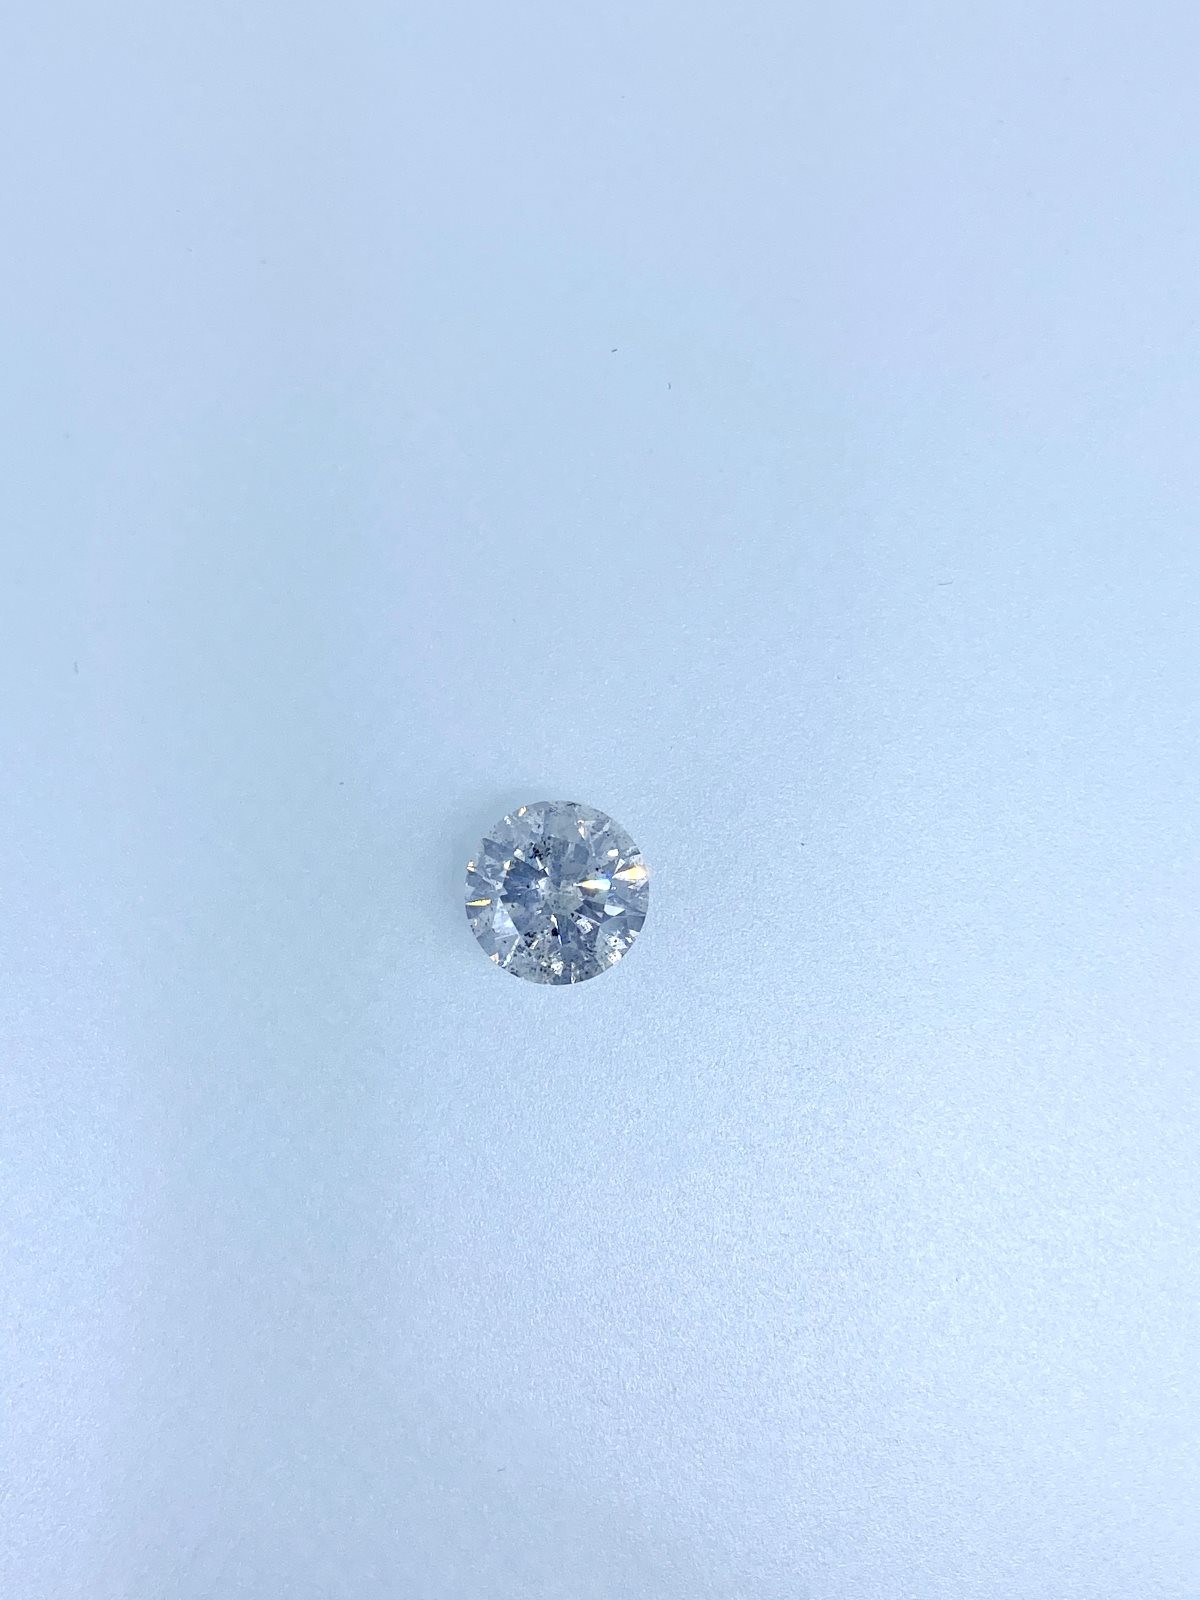 White Round Diamond - 5.53 carats